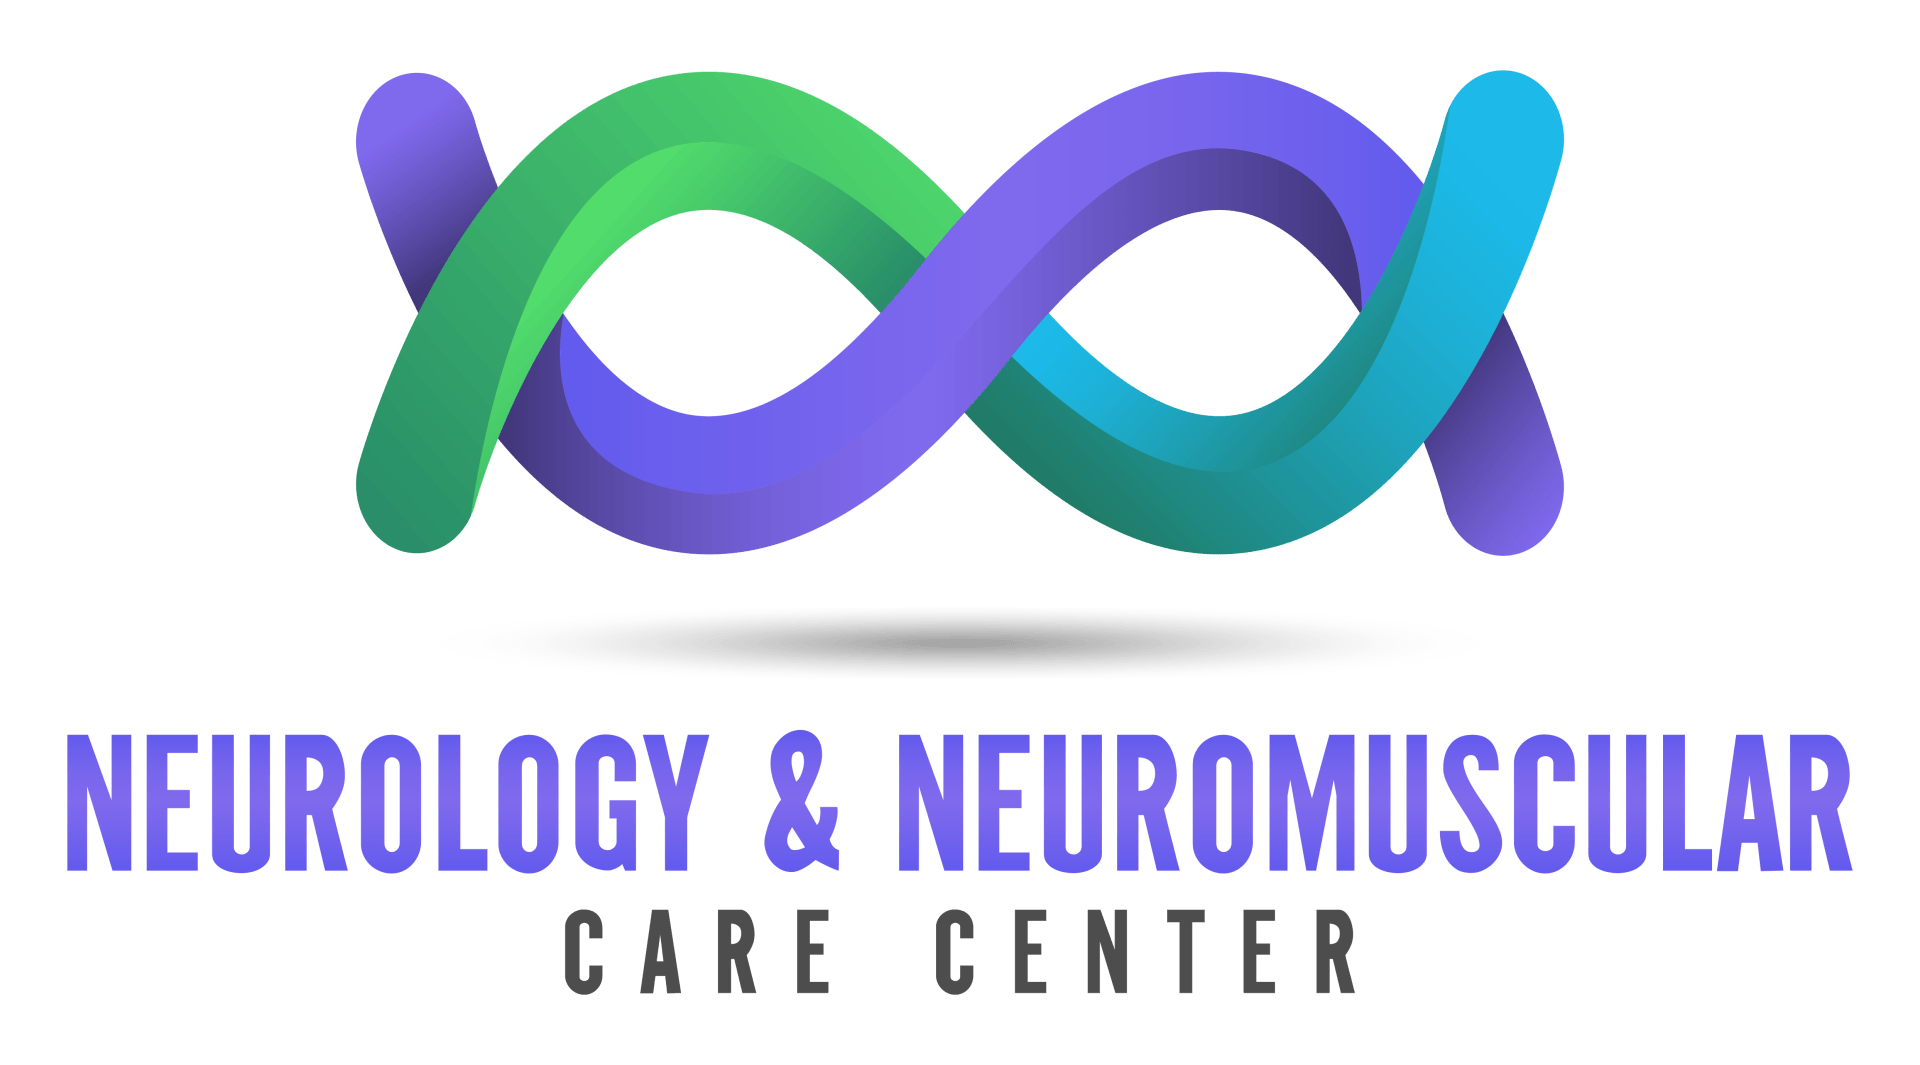 Neurology & Neuromuscular Care Center - Diana Castro MD